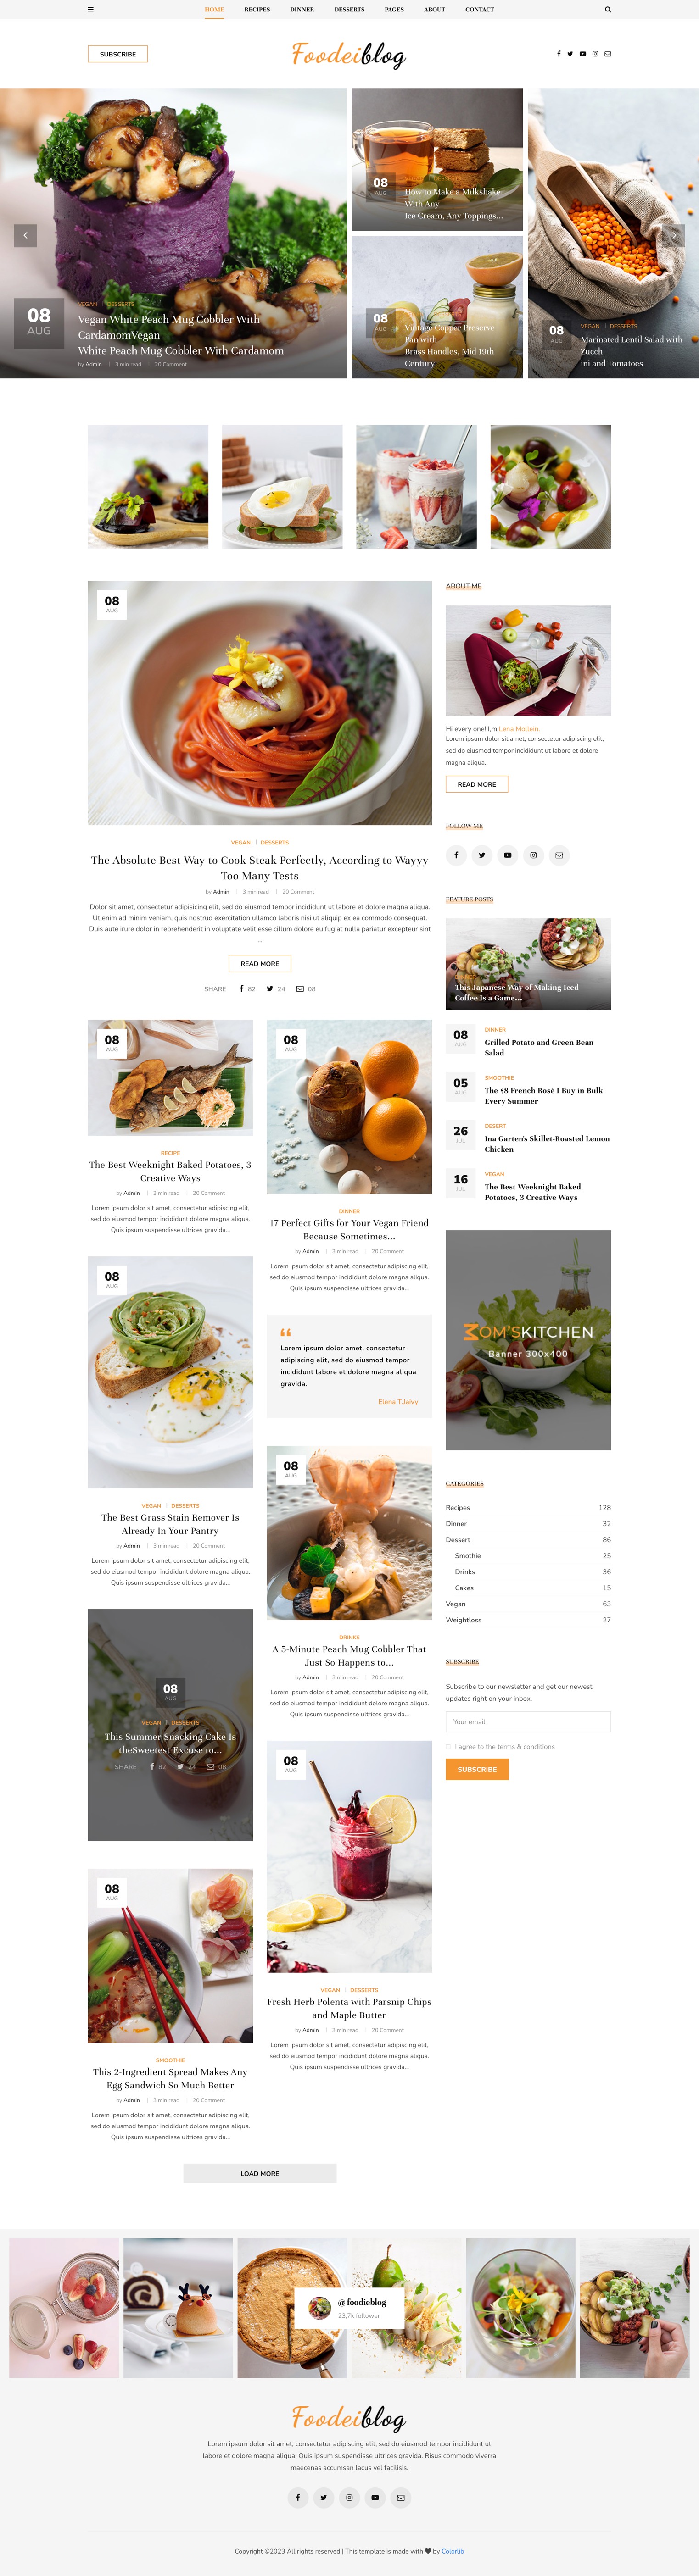 FoodeiBlog Free HTML template